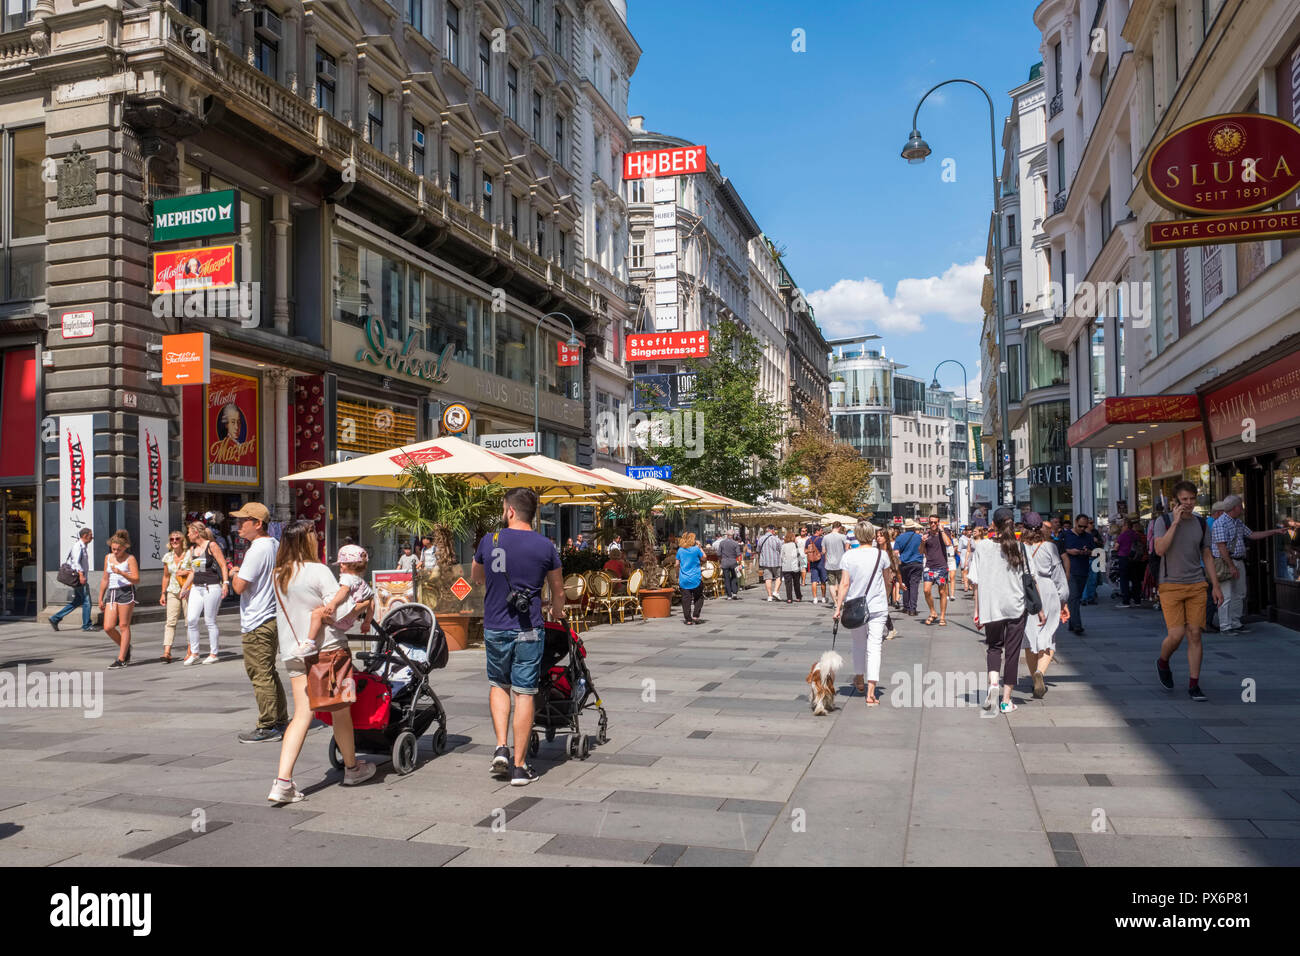 Street scene in Kartner Strasse, a shopping street in central Vienna, Austria, Europe Stock Photo